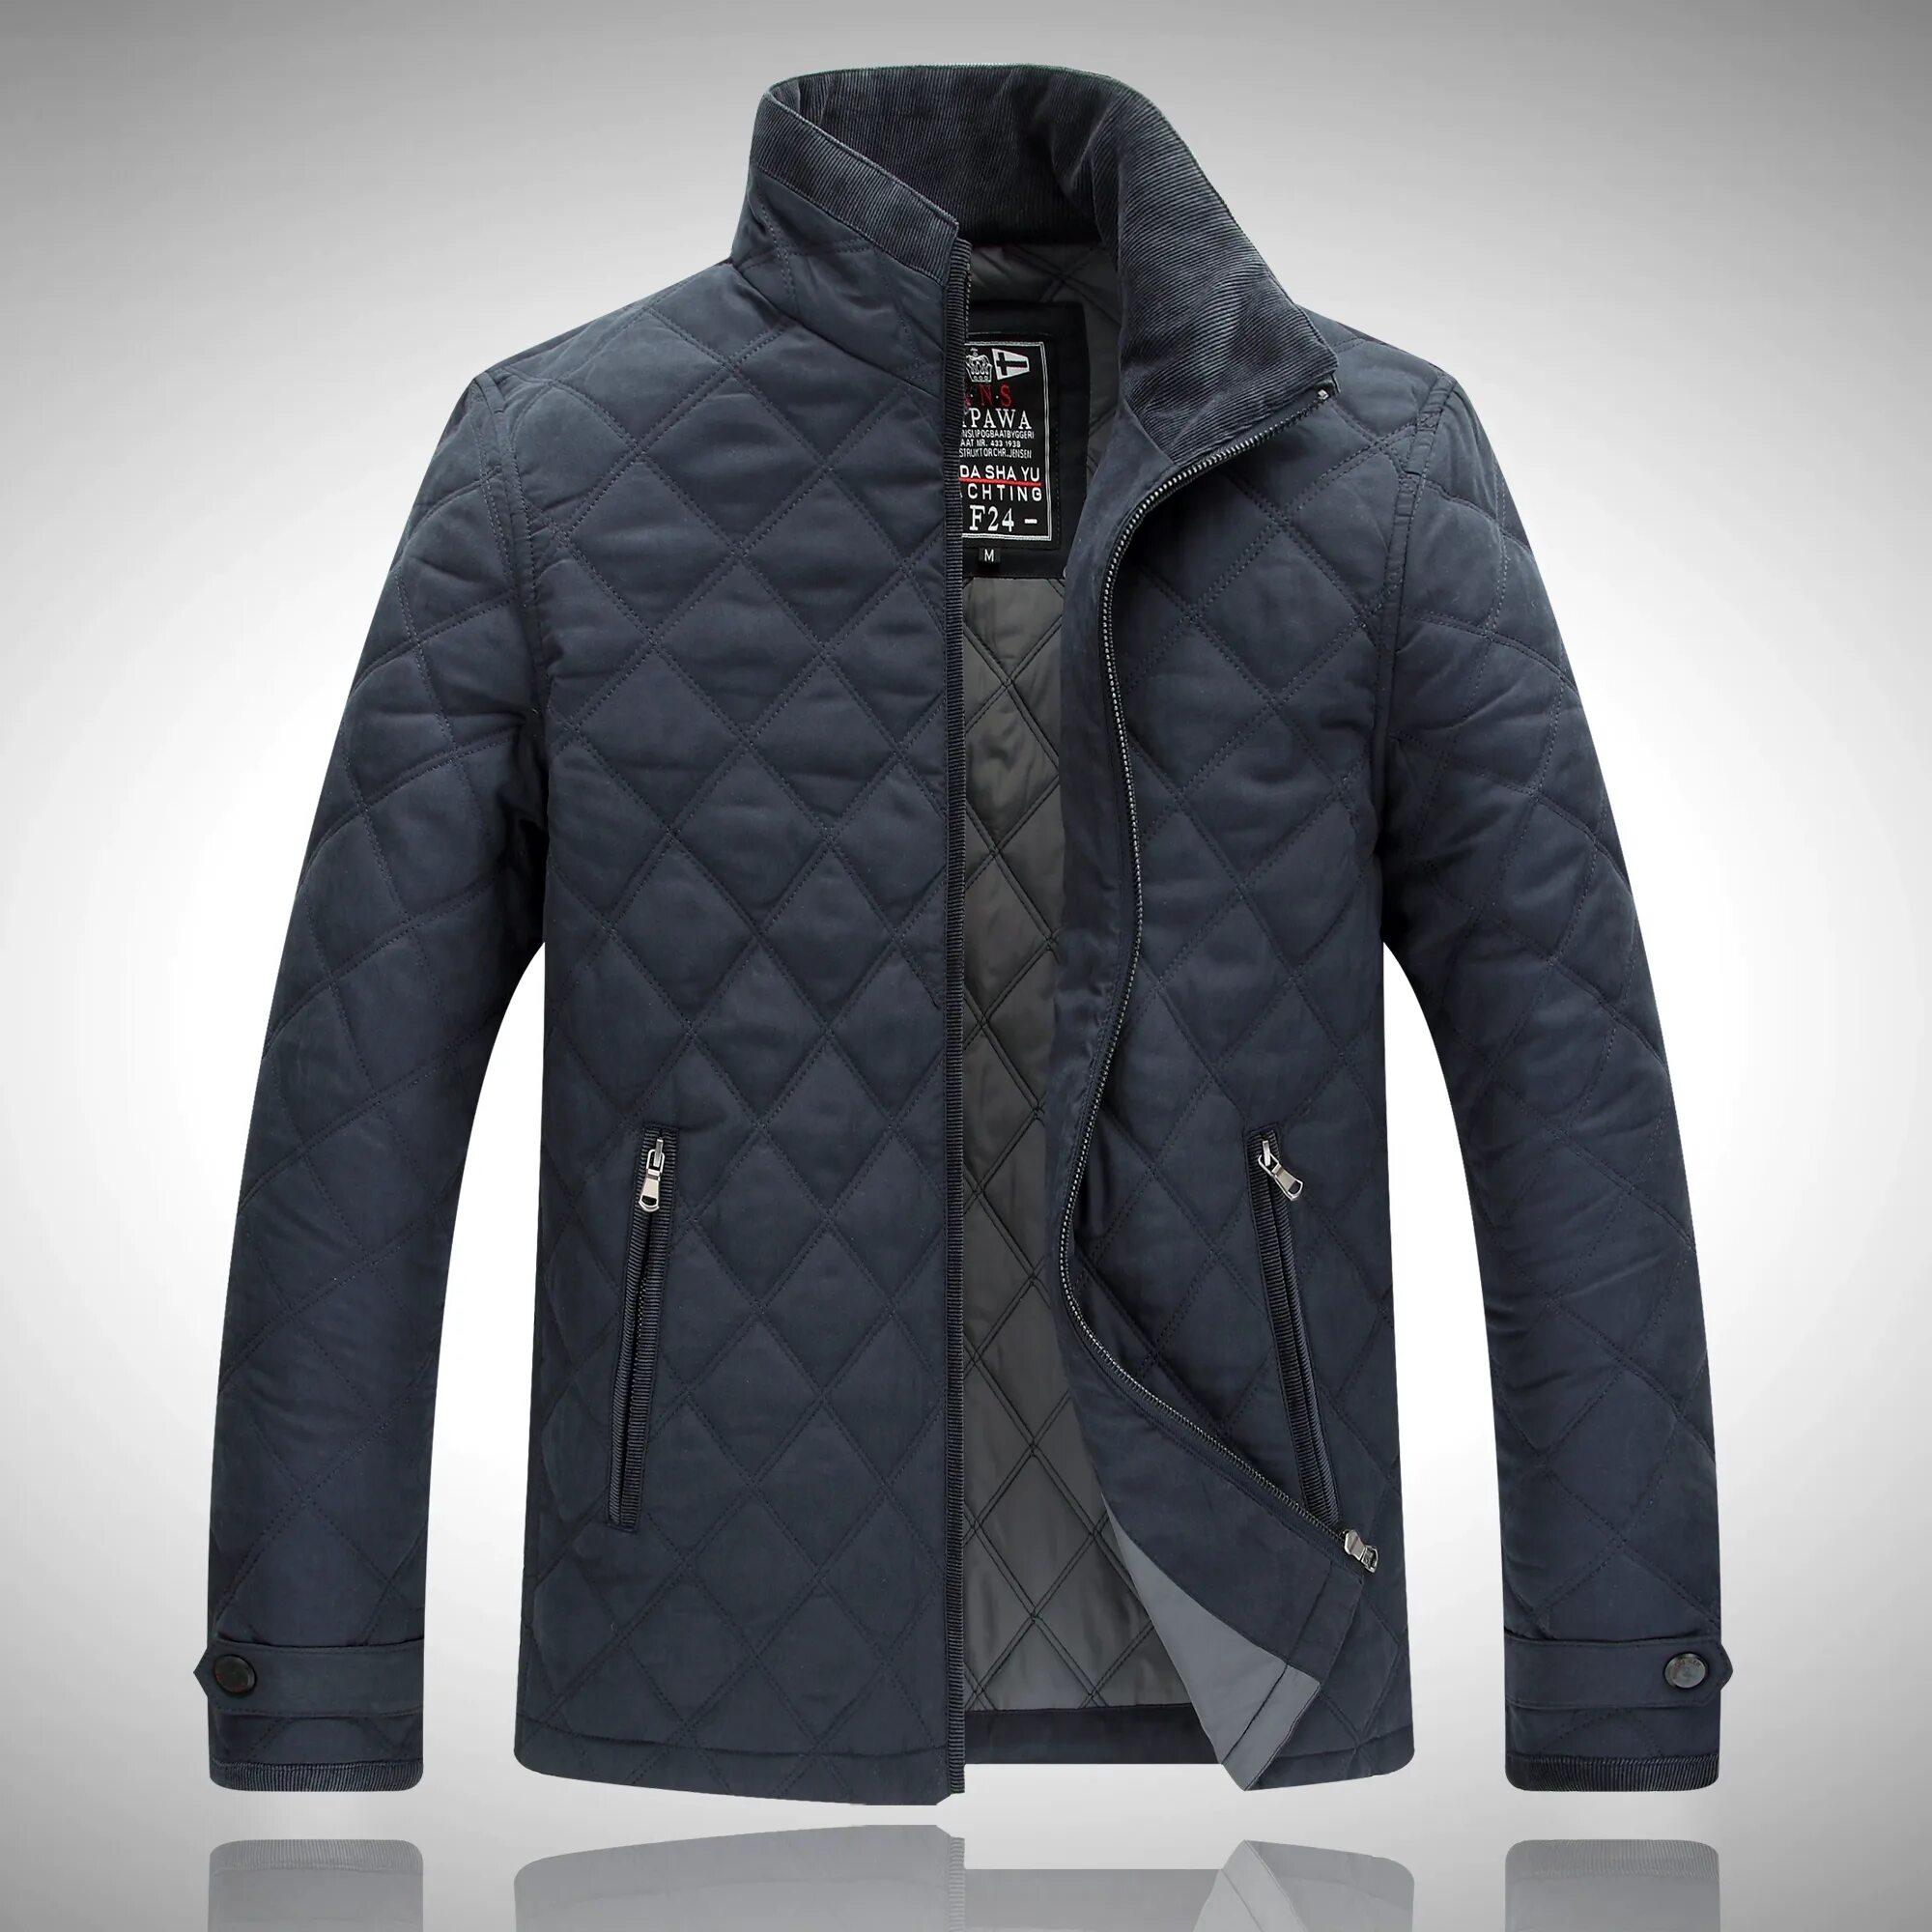 KITTLANGZHI Fashion collection куртка мужская зимняя. Куртка пальто Ronan 778 мужская. Куртка zaka Fashion Classic мужская демисезонная f5218.